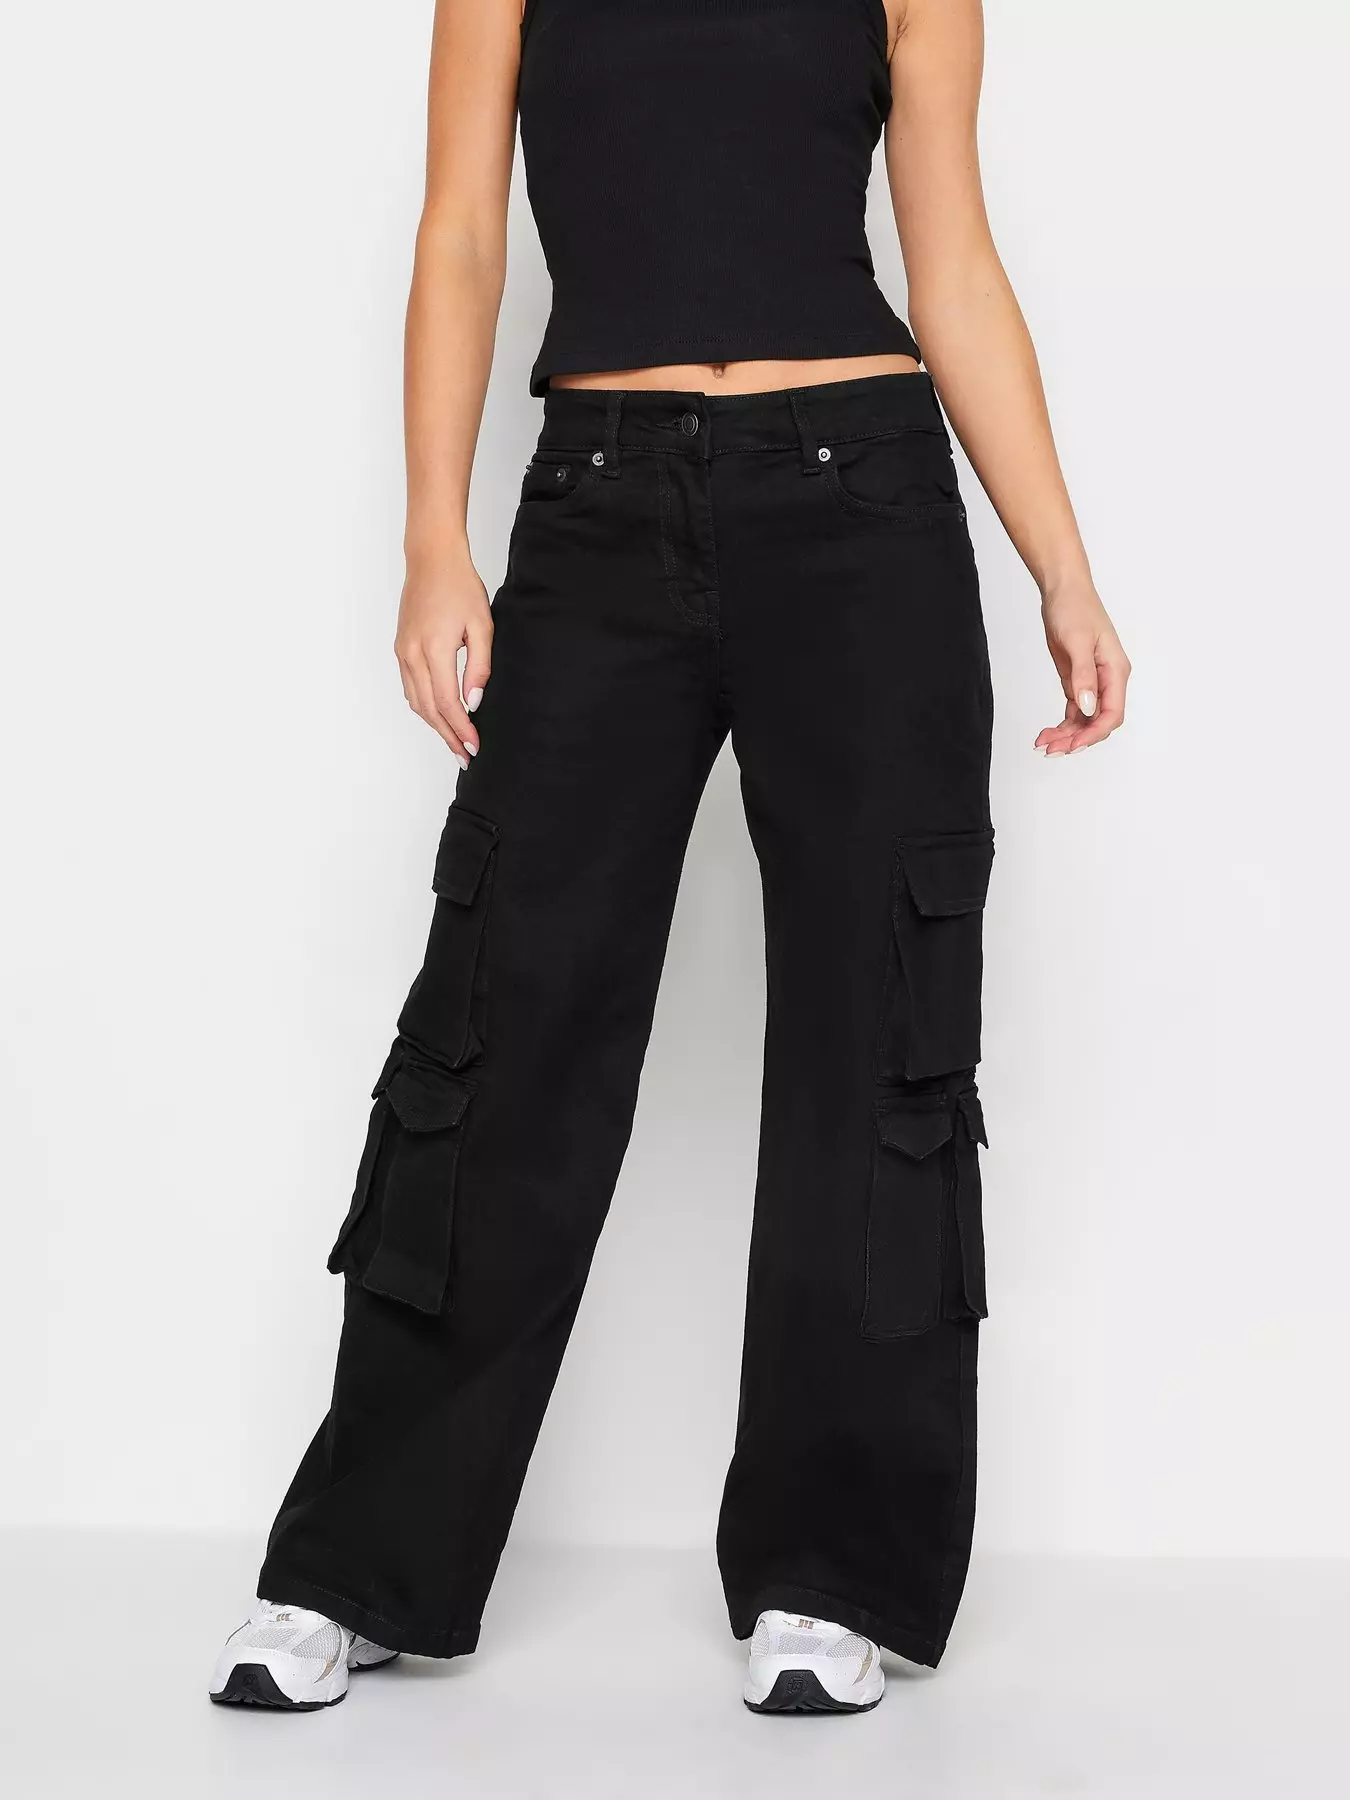 25 Petite Moda Trousers - Black